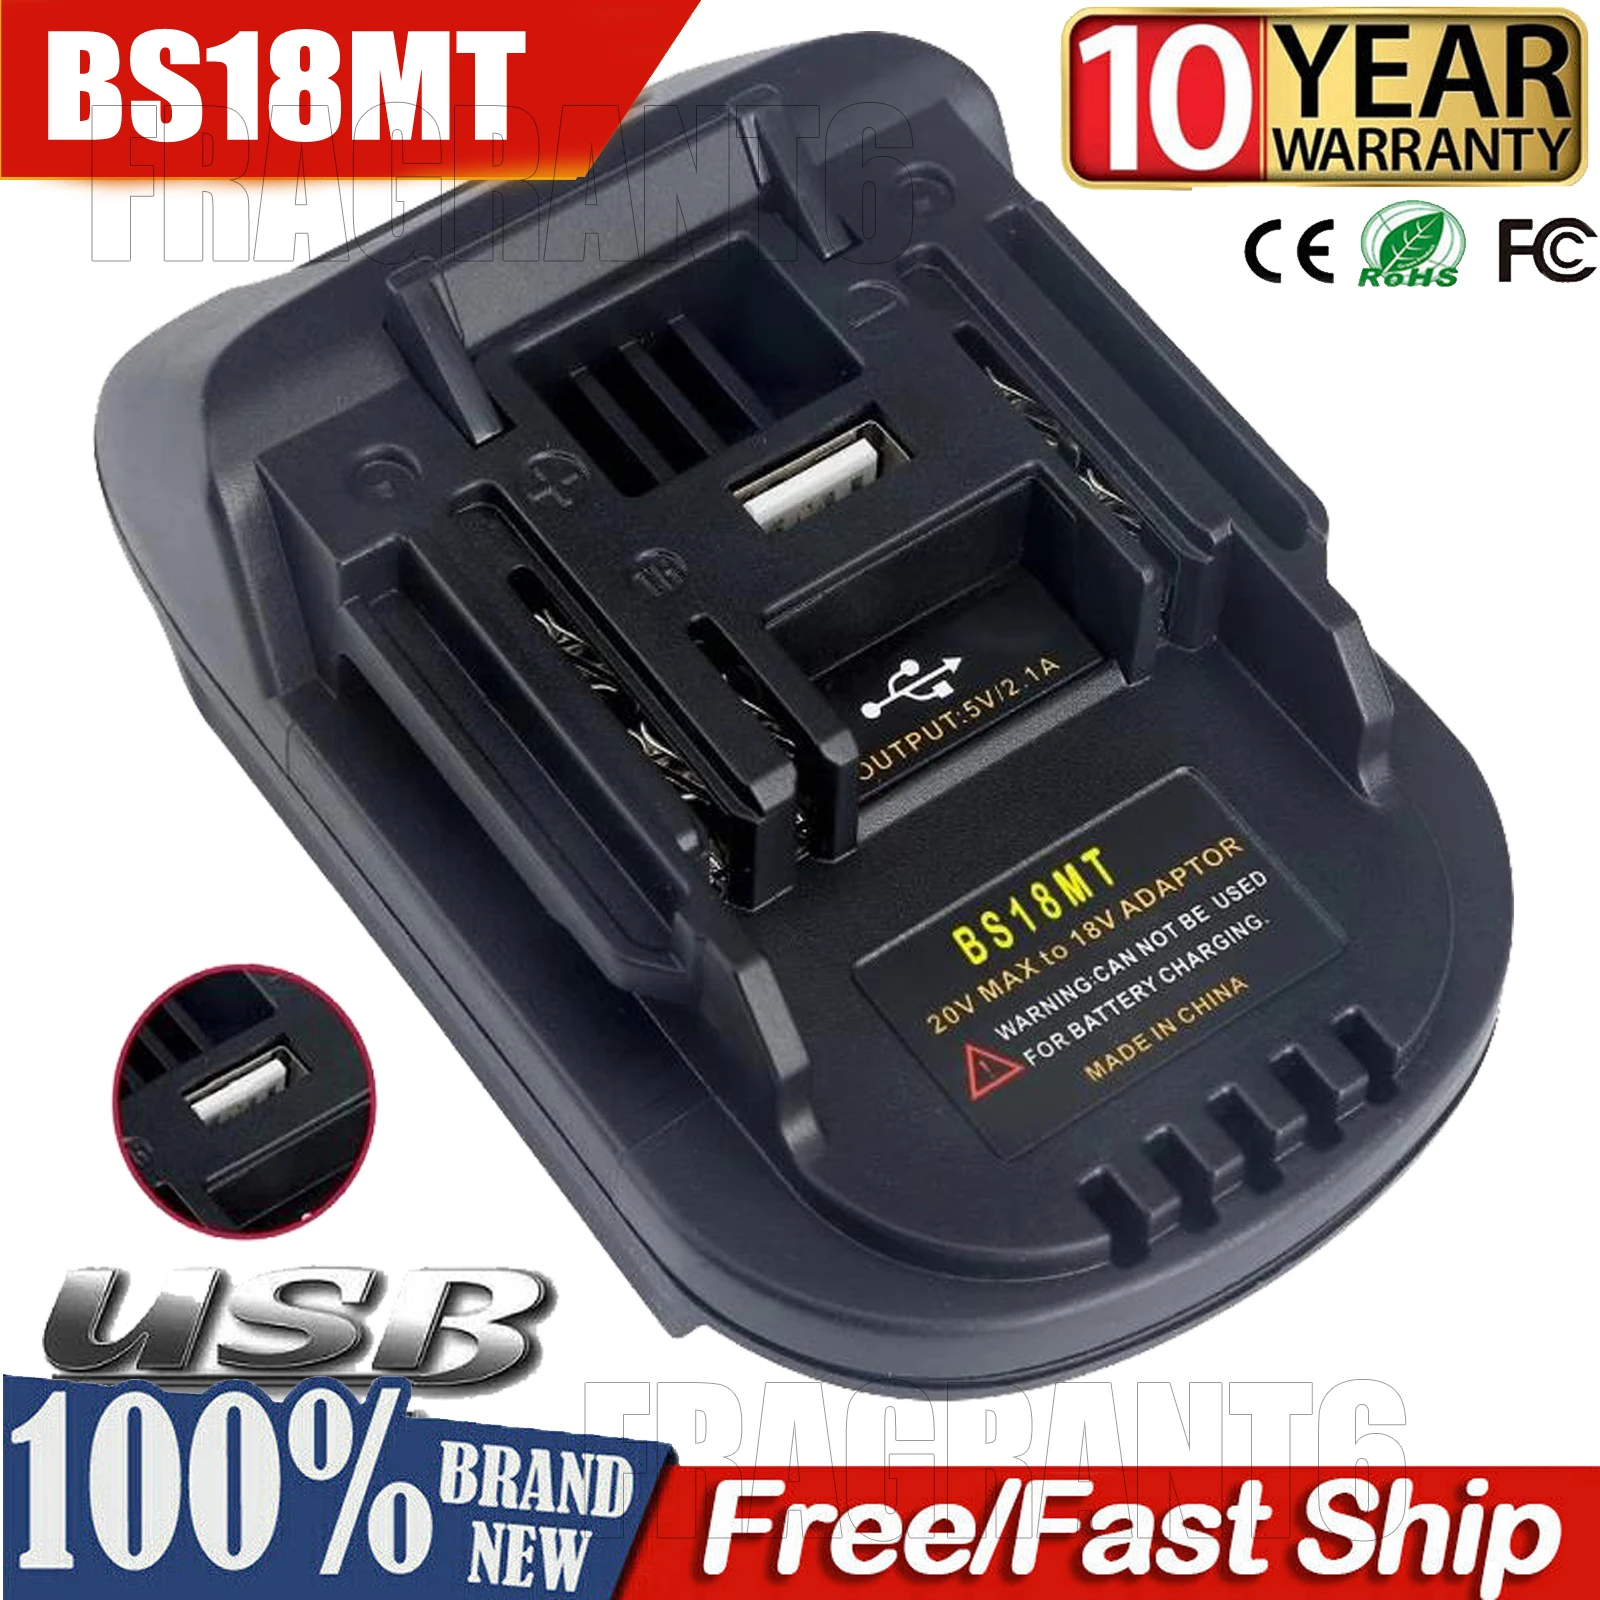 BS18MT Battery Adapter Converter USB For Bosch 18V BAT619G/620 Batteries Convert For Makita BL 1860 Lithium Tools enlarge